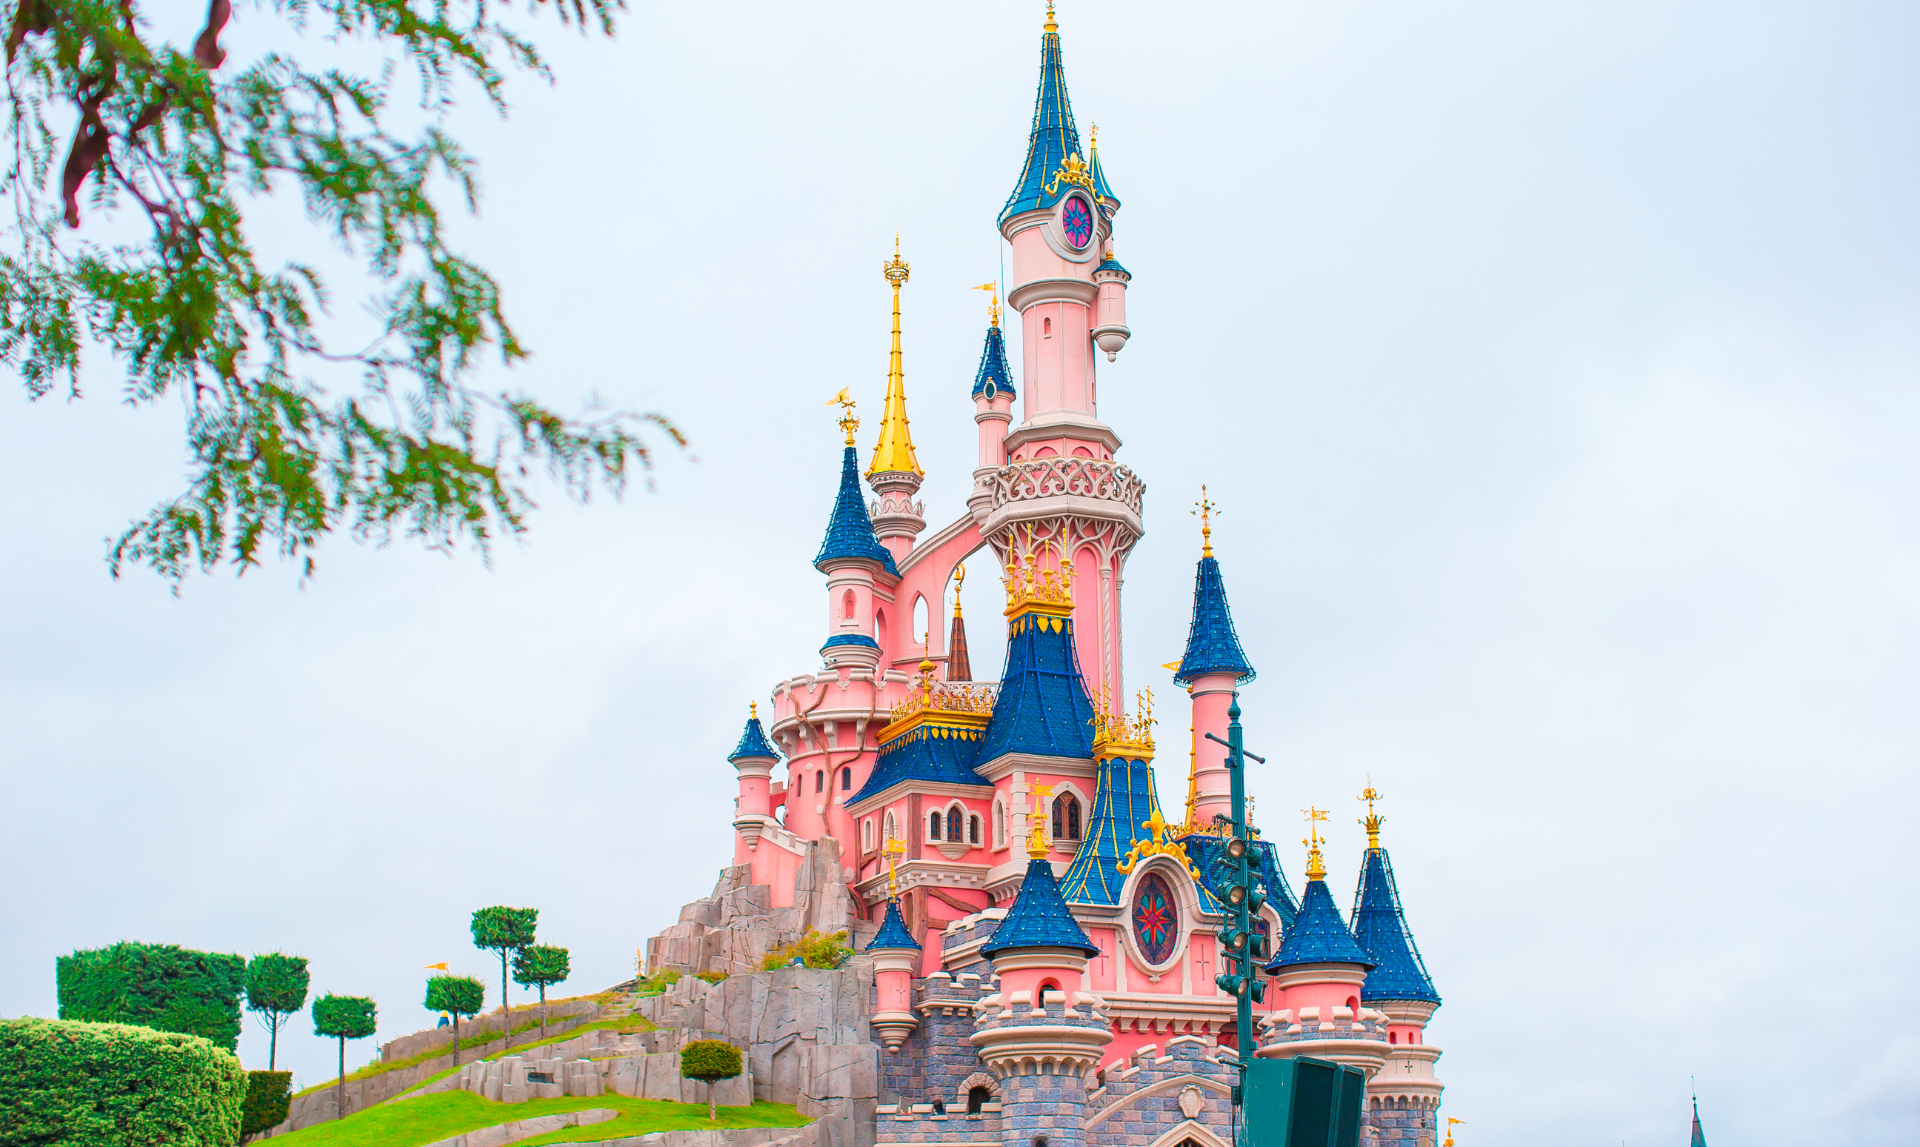 The Disneyland Paris castle